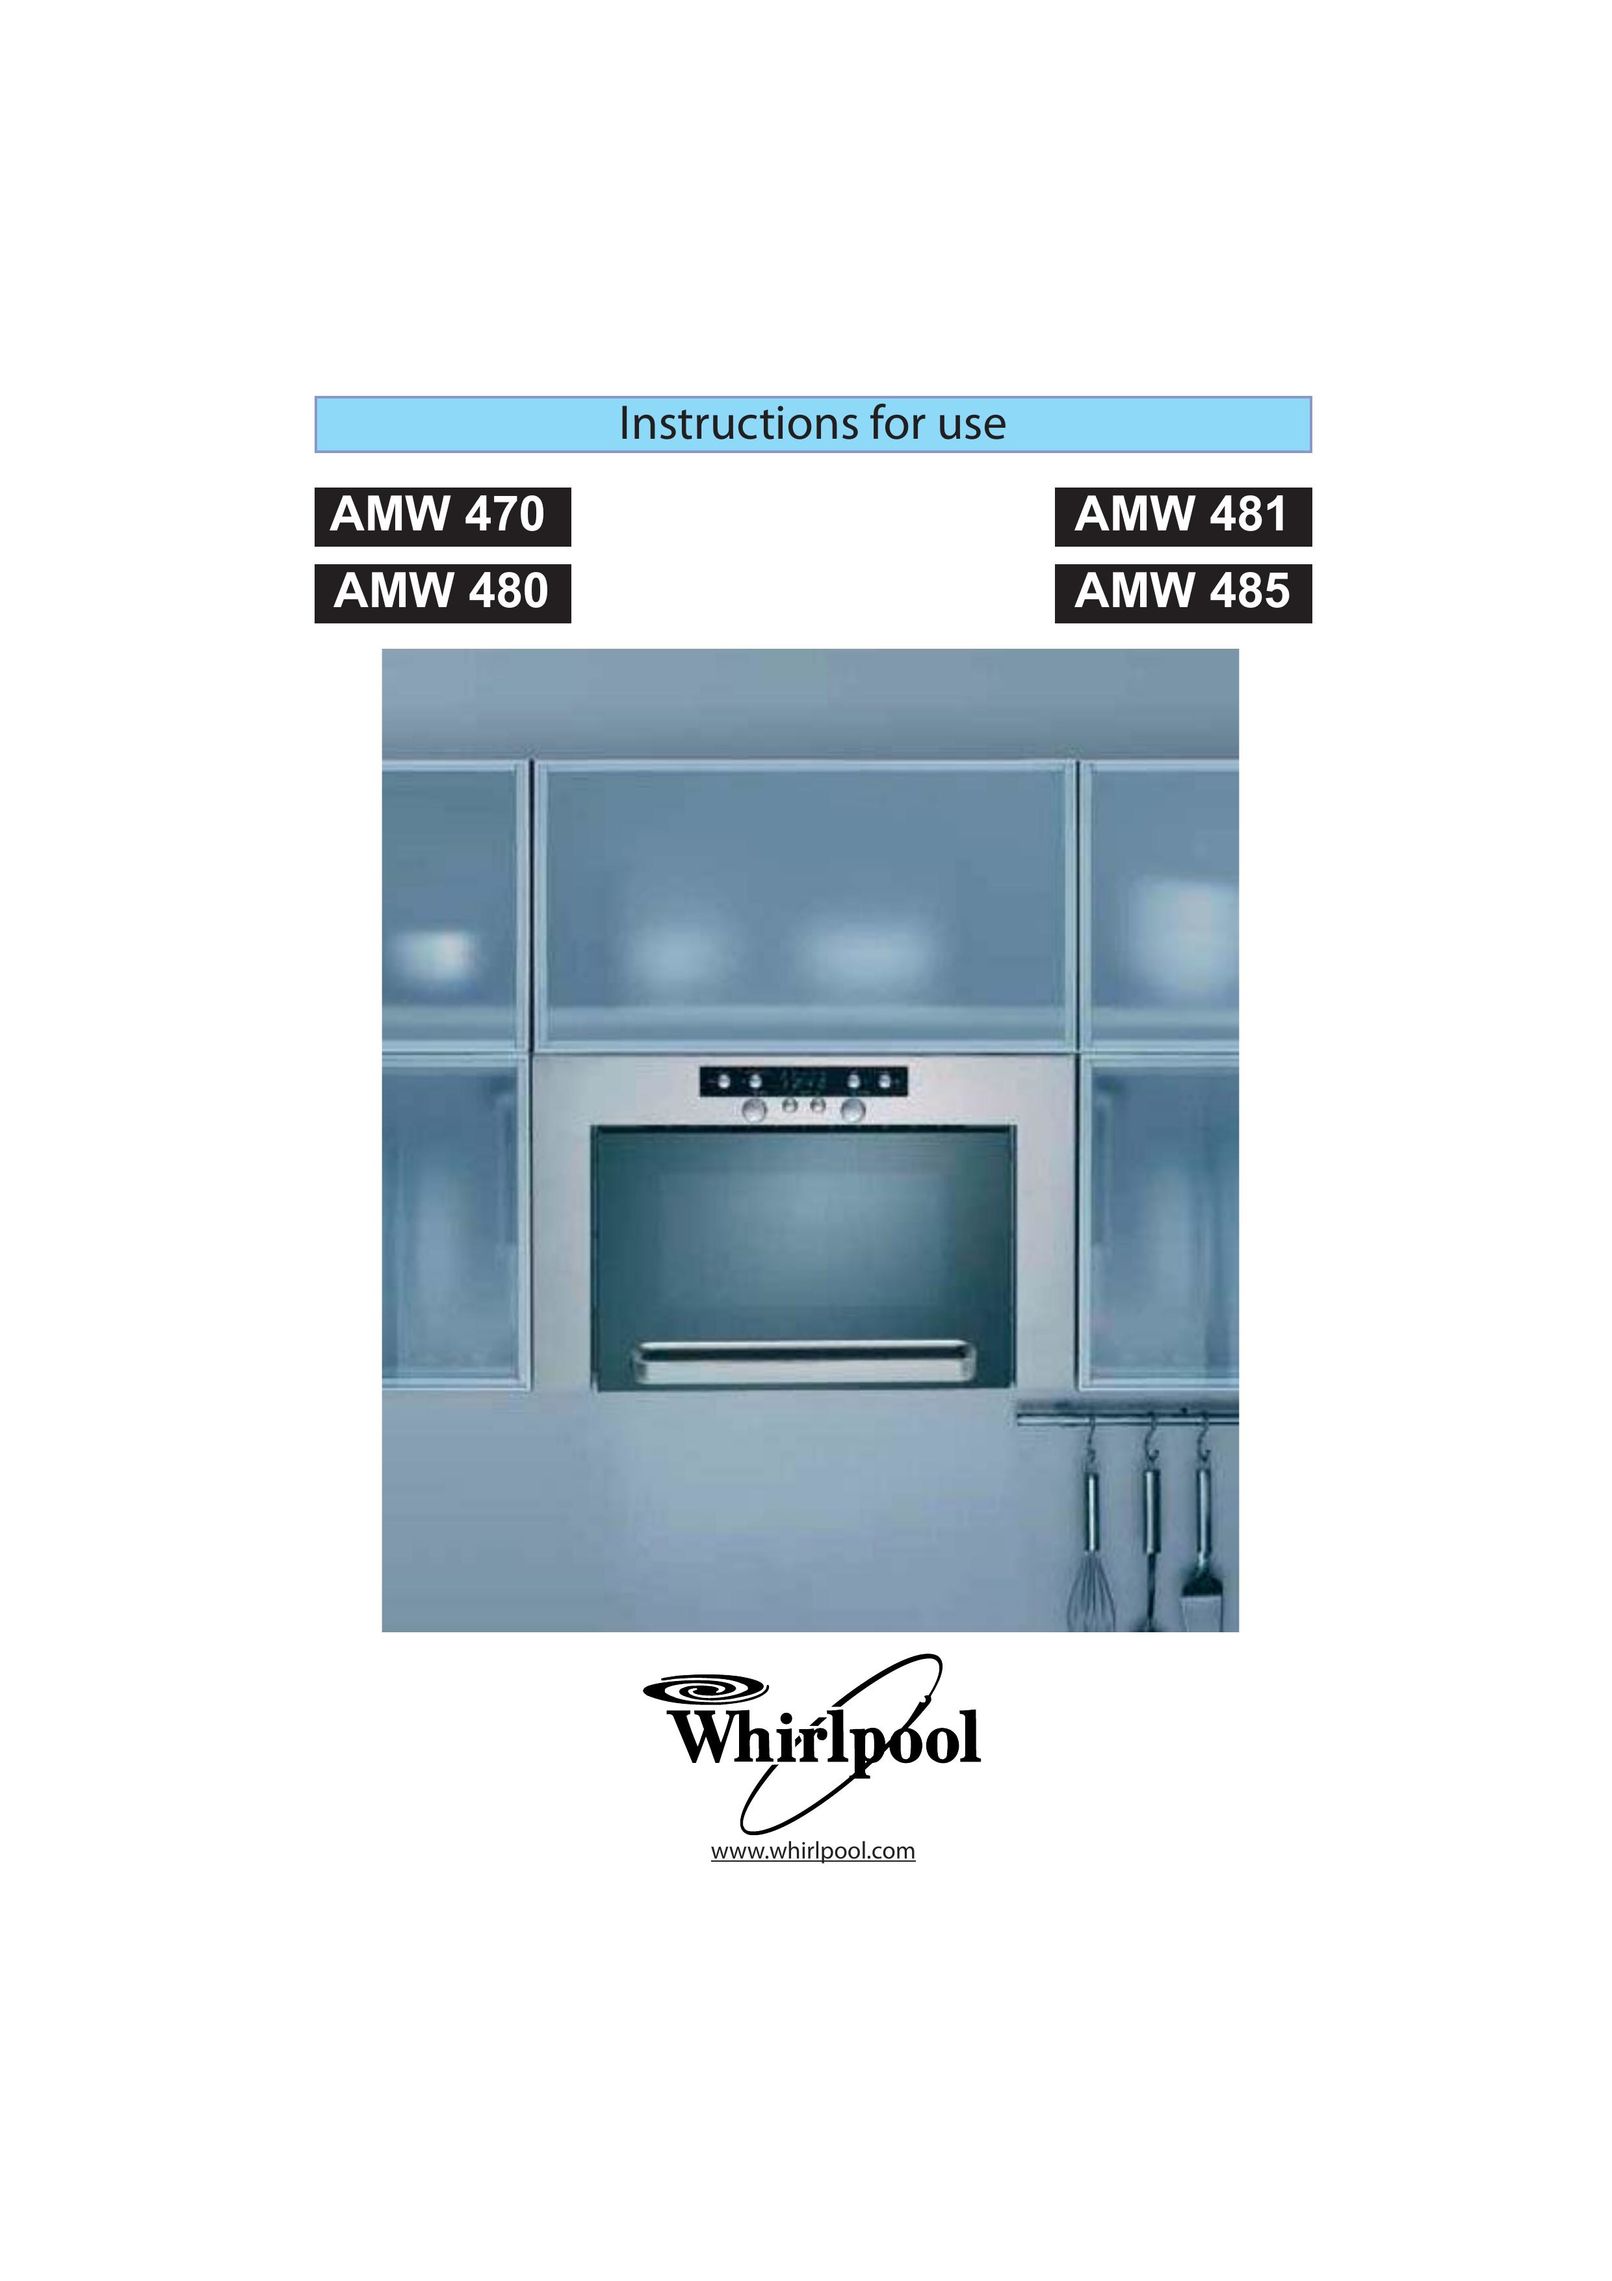 Whirlpool AMW 485 Microwave Oven User Manual